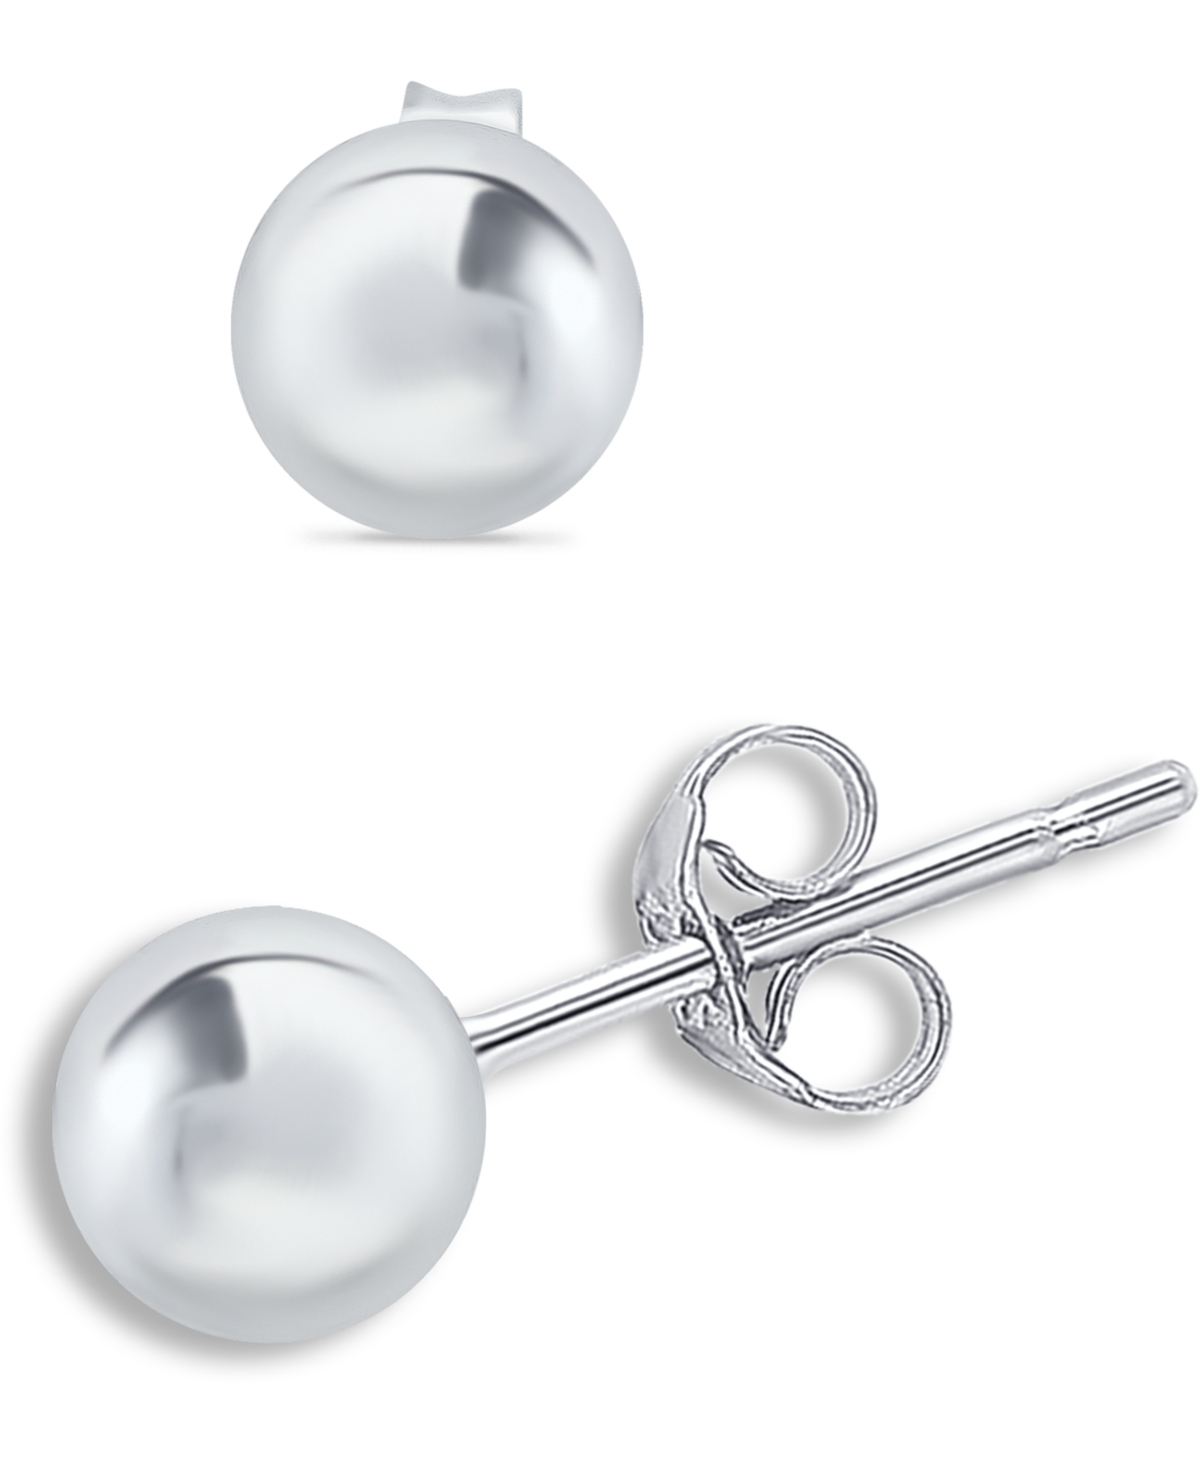 Giani Bernini Ball Stud Earrings (10mm) in Sterling Silver, Created for Macy's